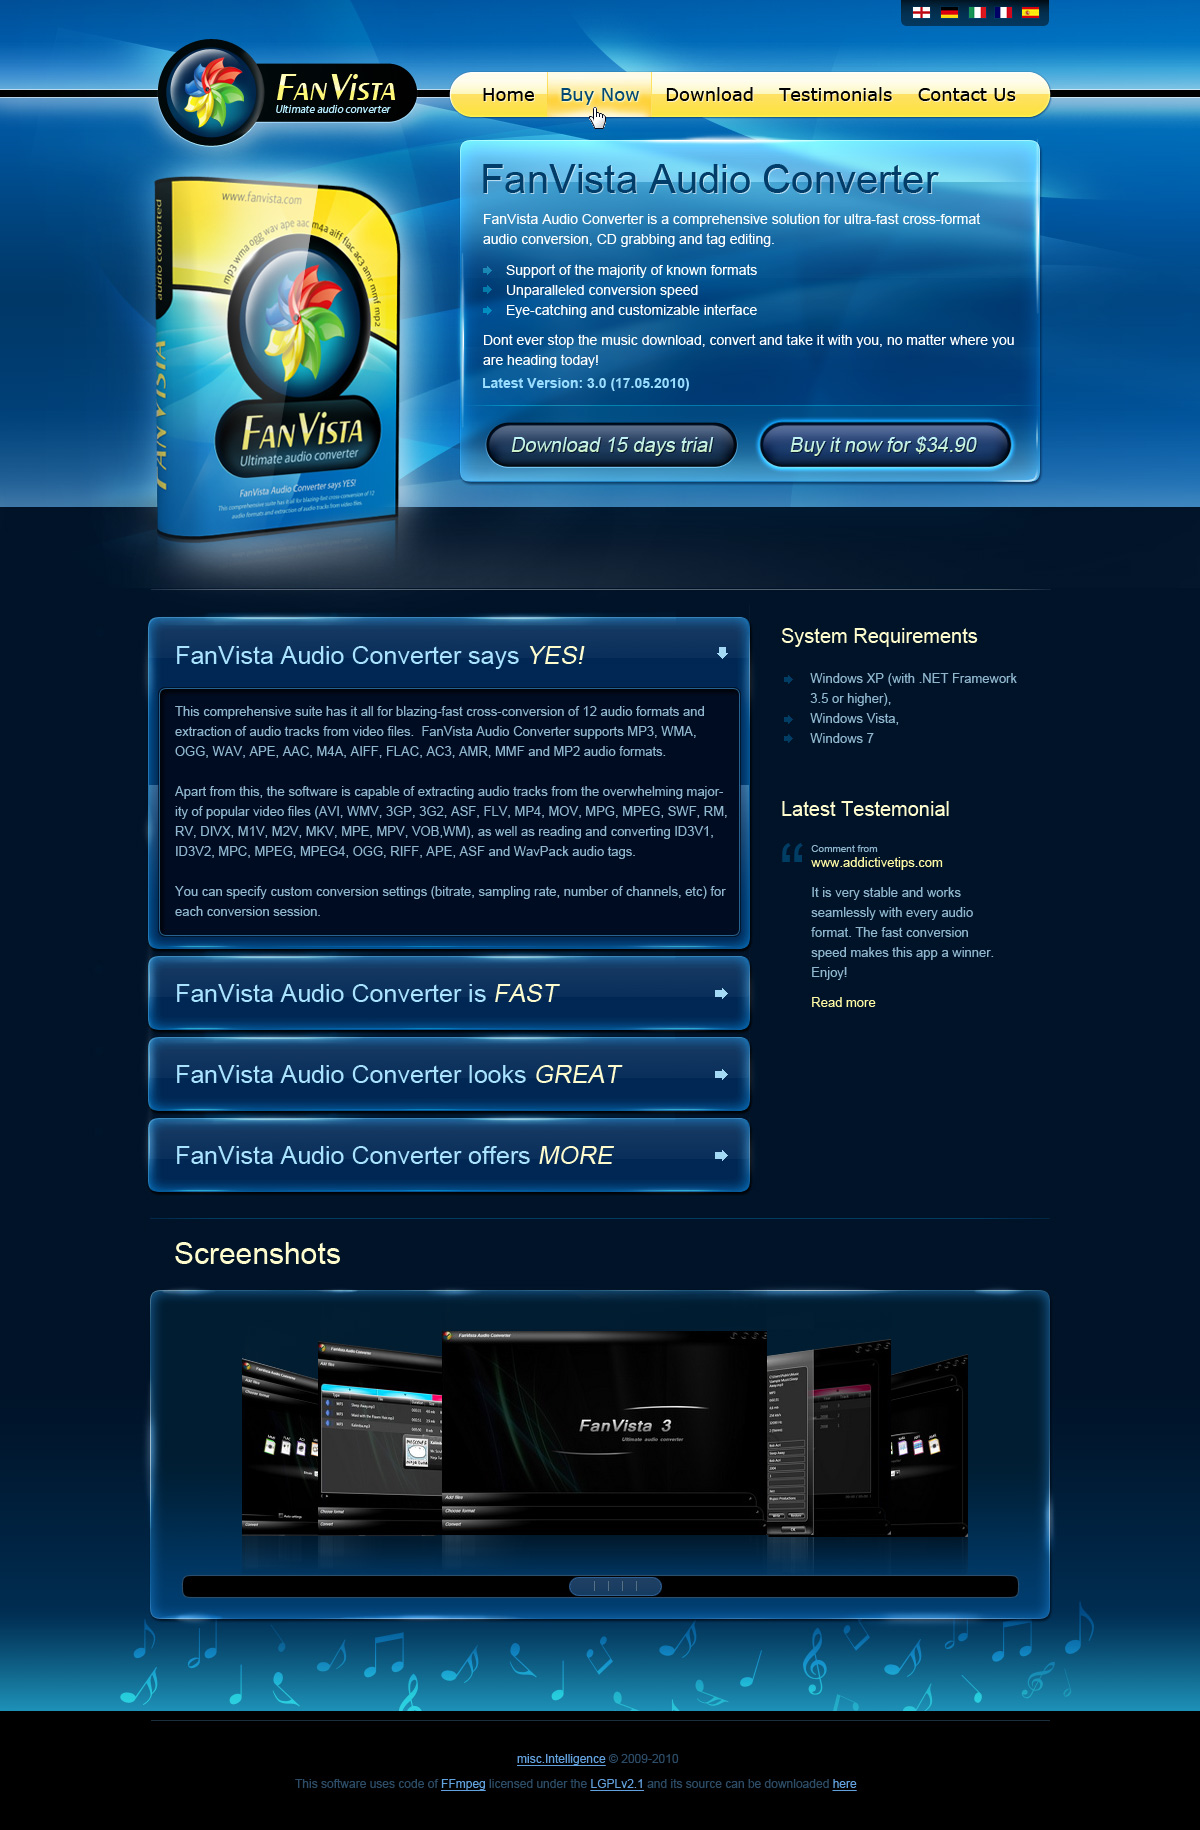 FanVista Audio Converter Website Design